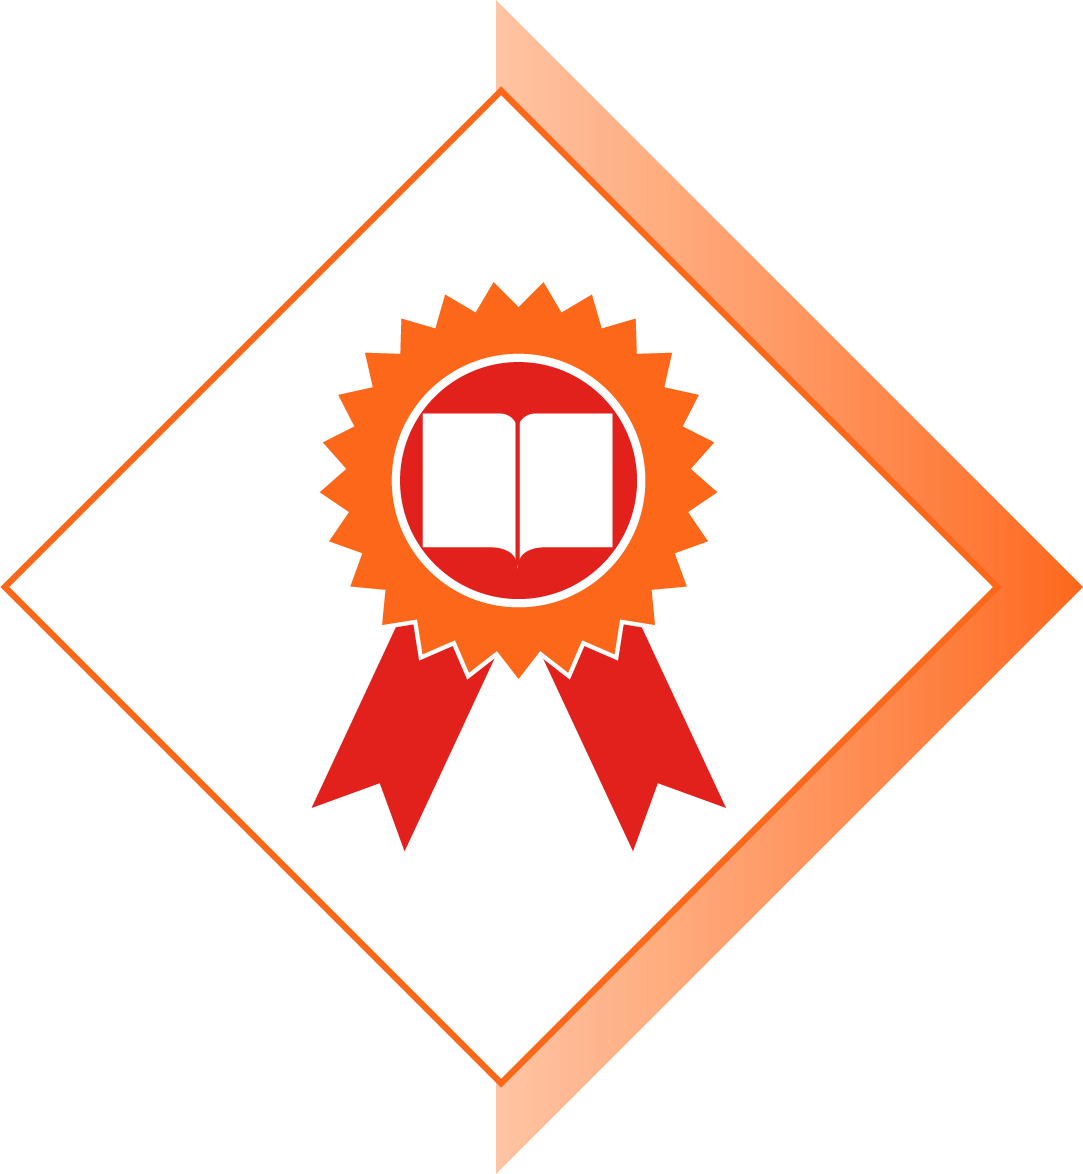 Award icon with ribbon